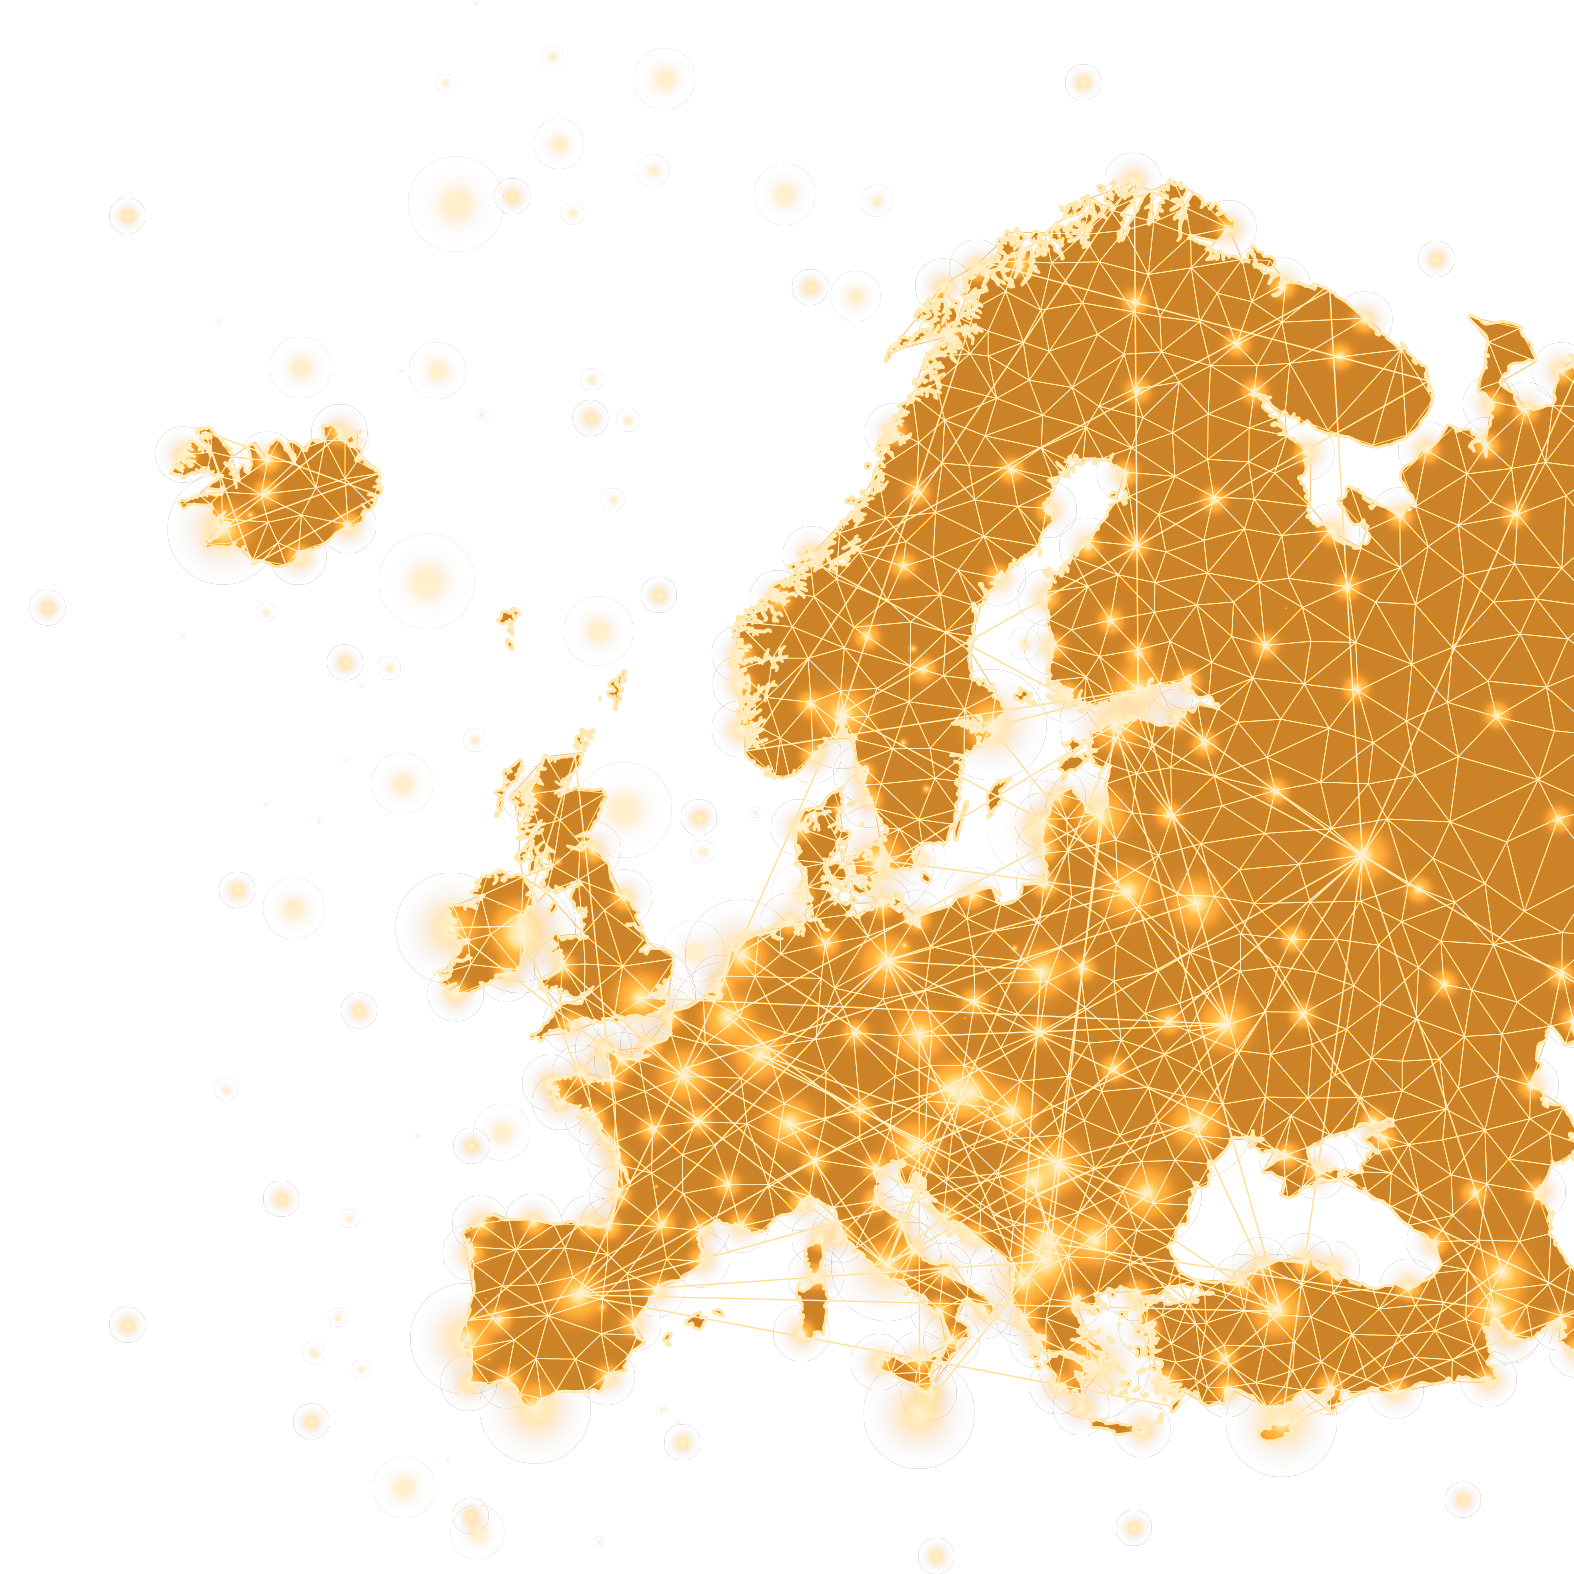 europe_data_map